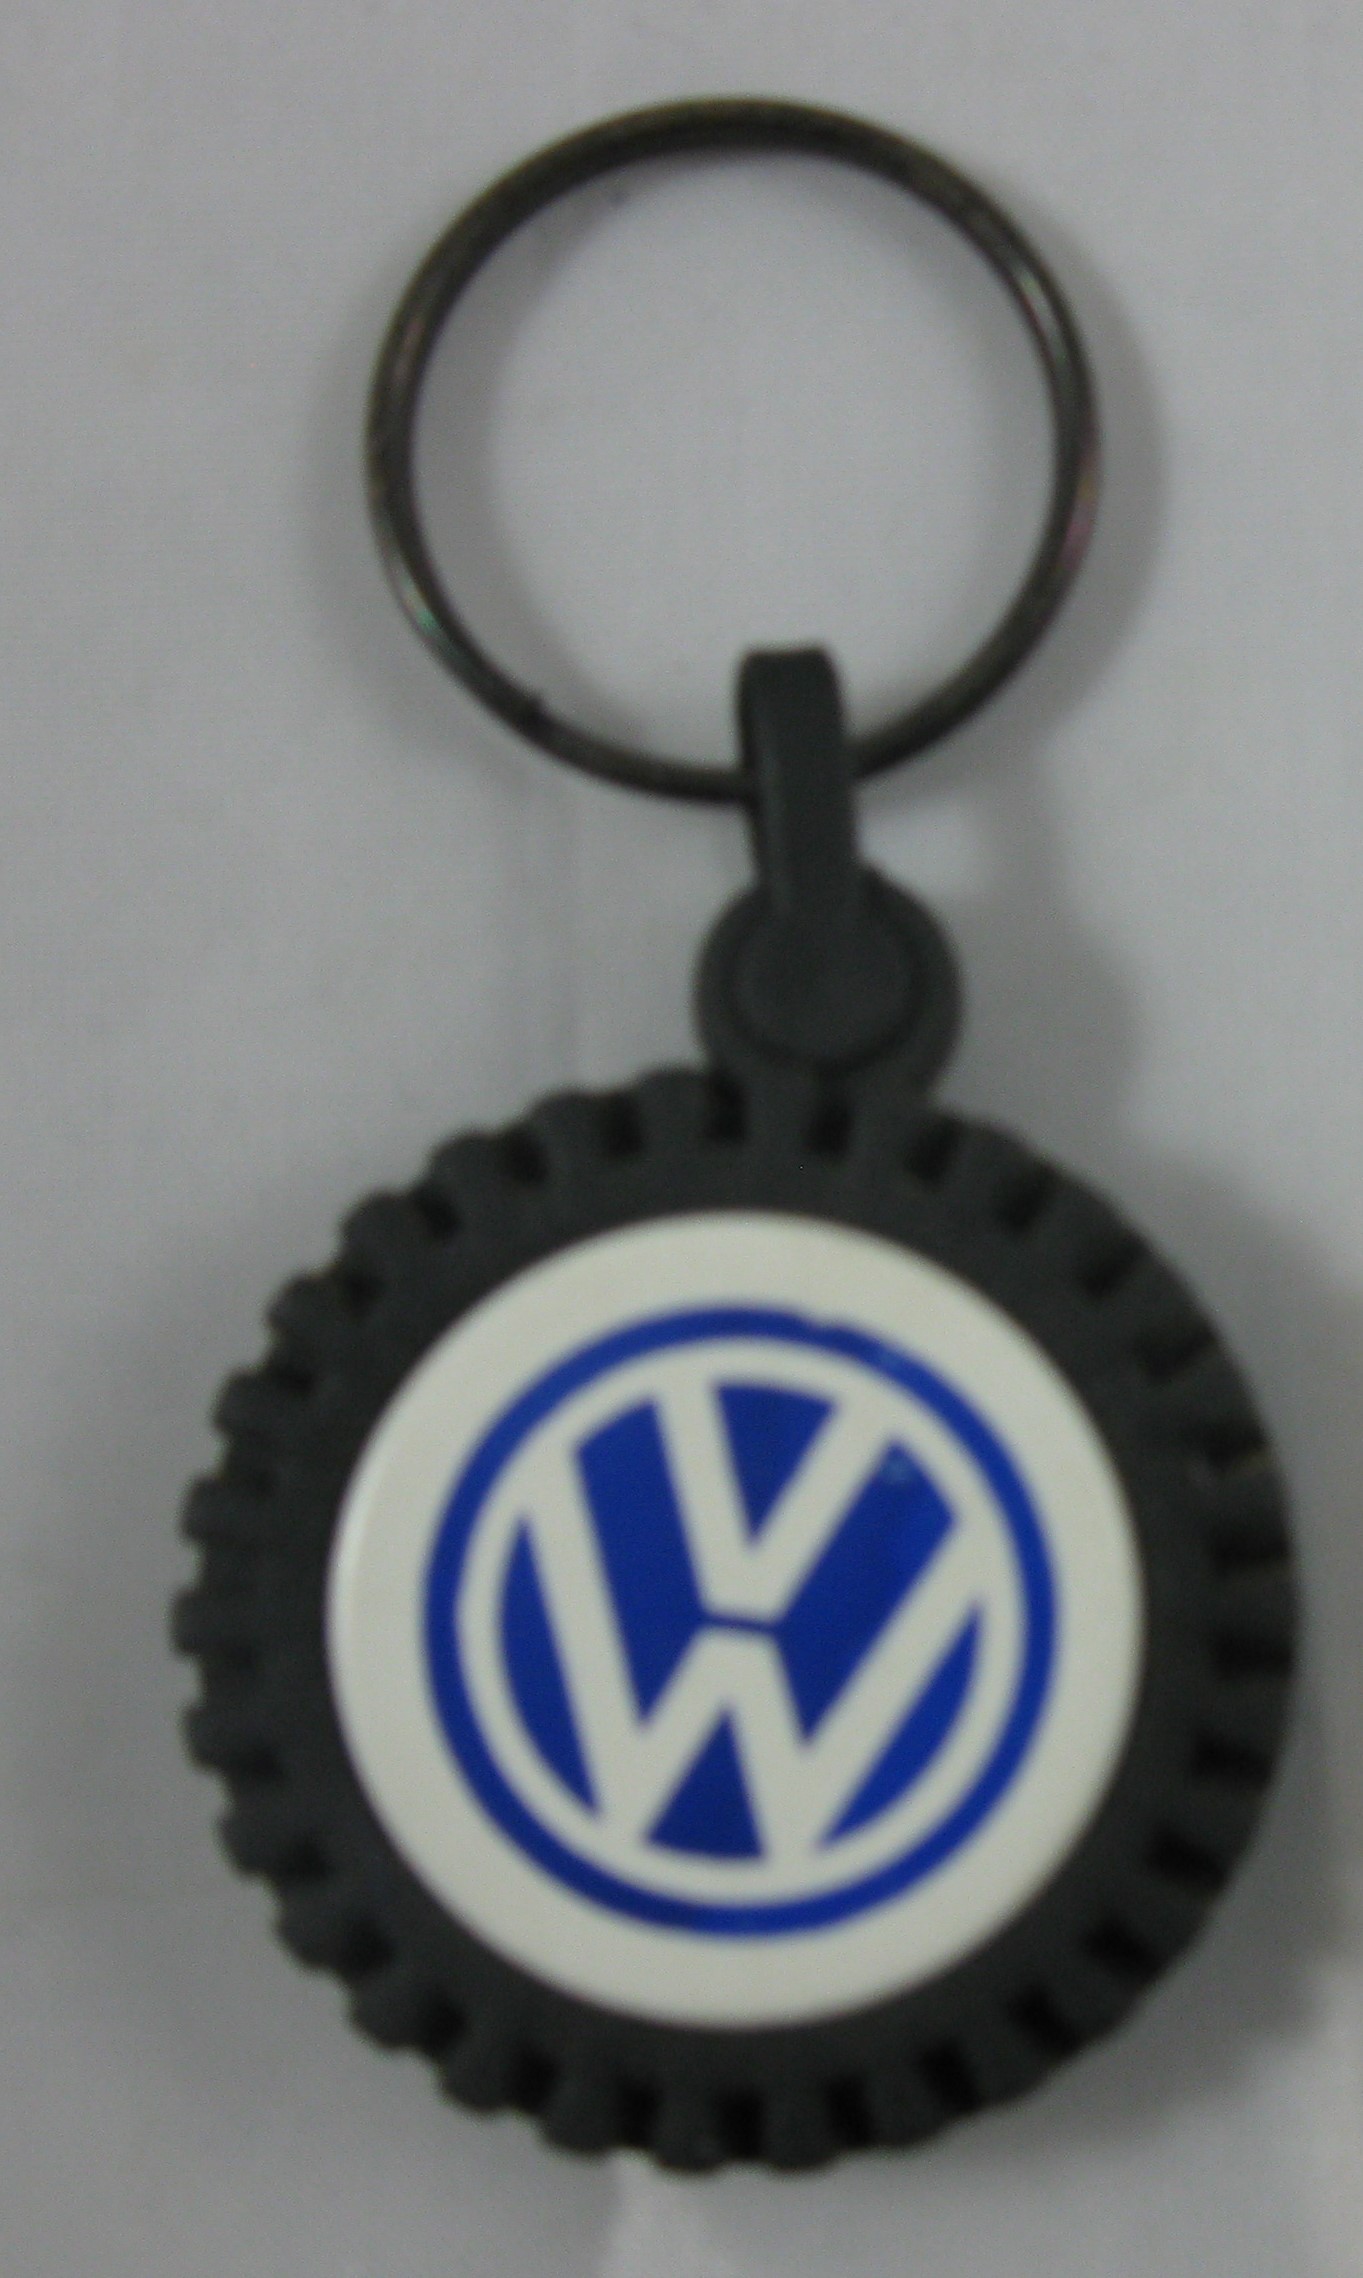 Porte clés Volkswagen d'origine (Nouveau Logo Volkswagen)